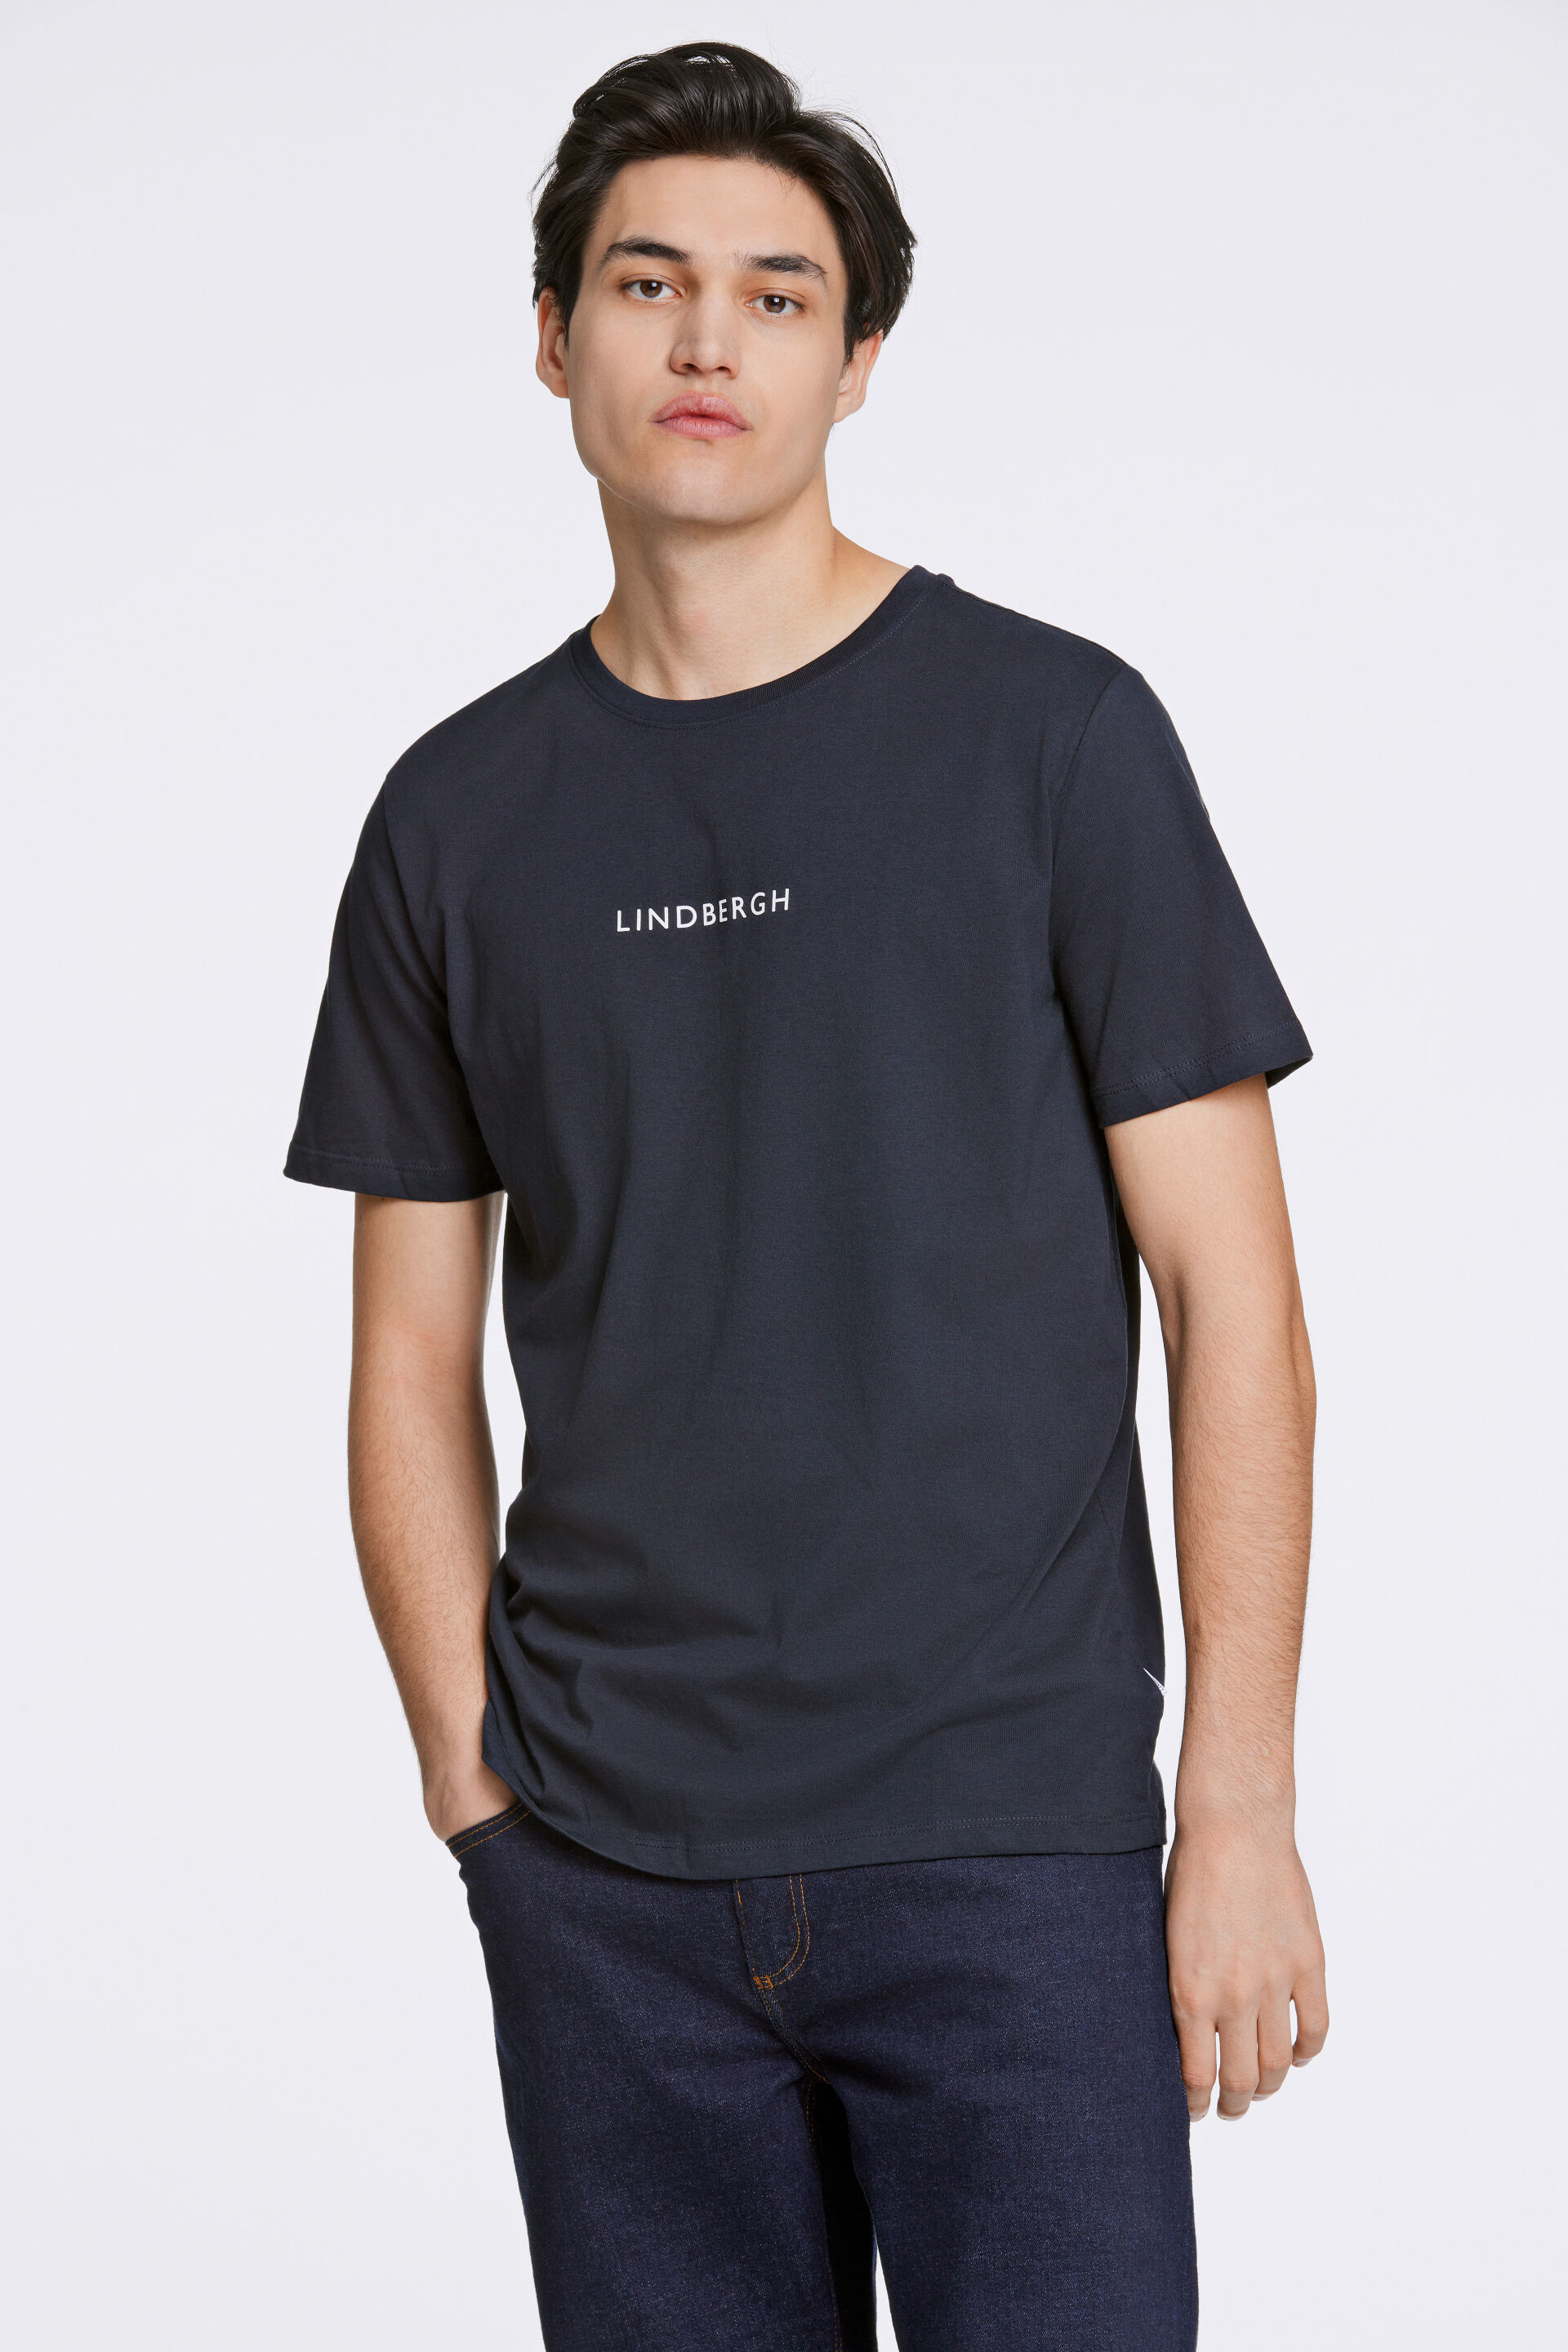 Lindbergh  T-shirt Blå 30-400200B